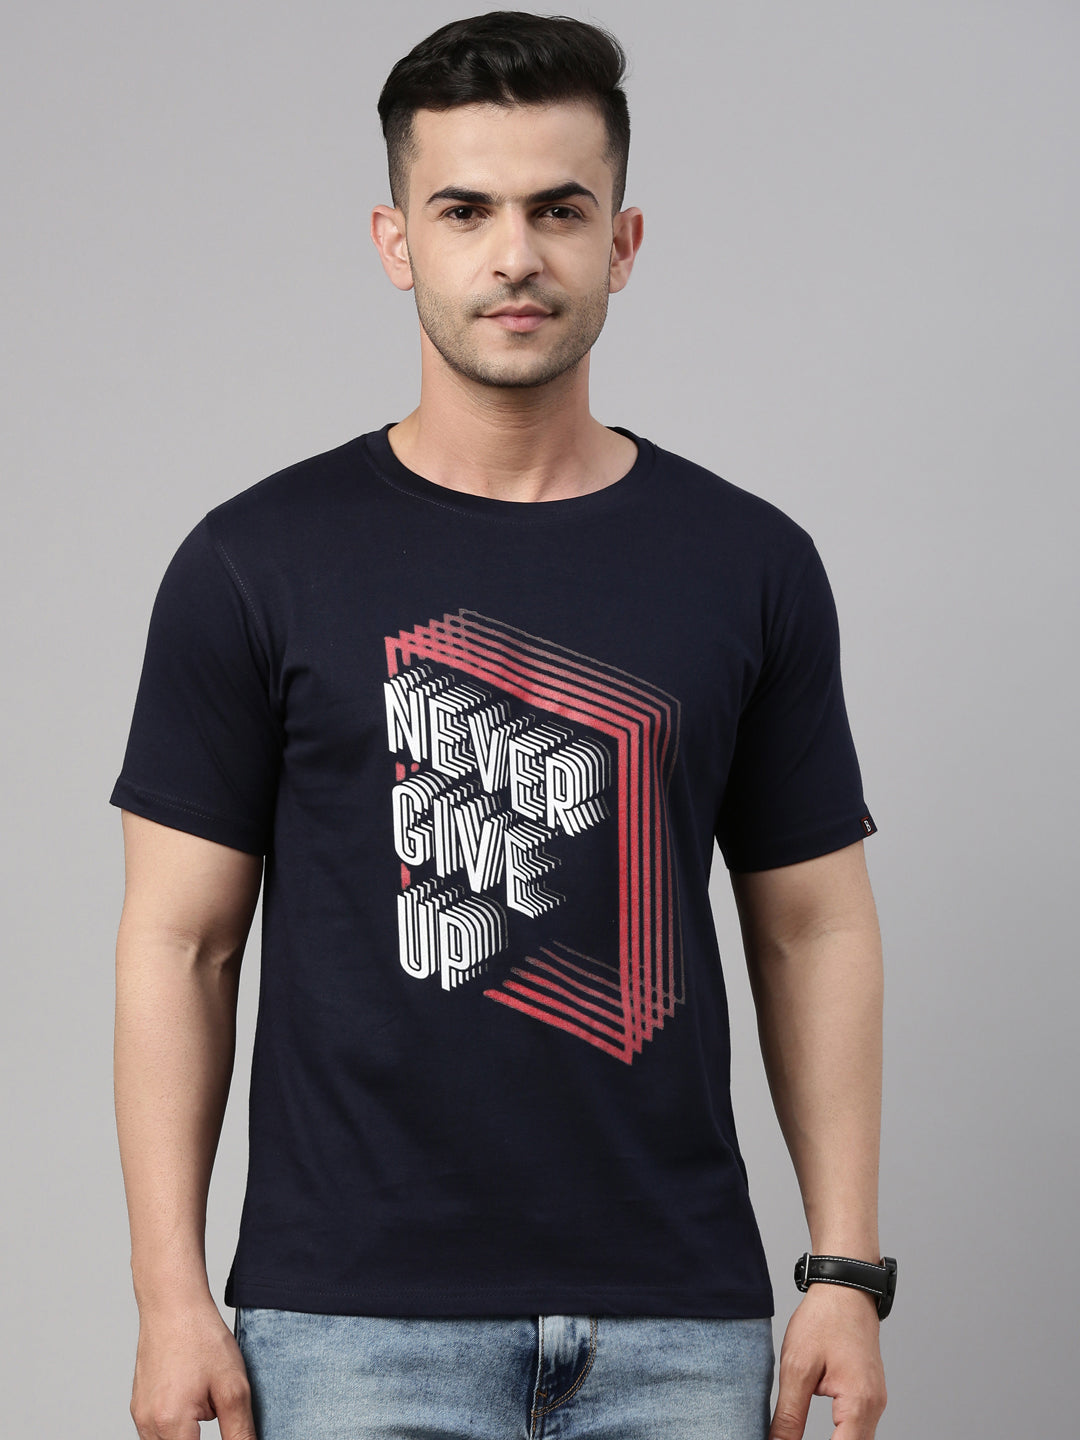 Never Give Up T Shirt Graphic T-Shirts Bushirt   